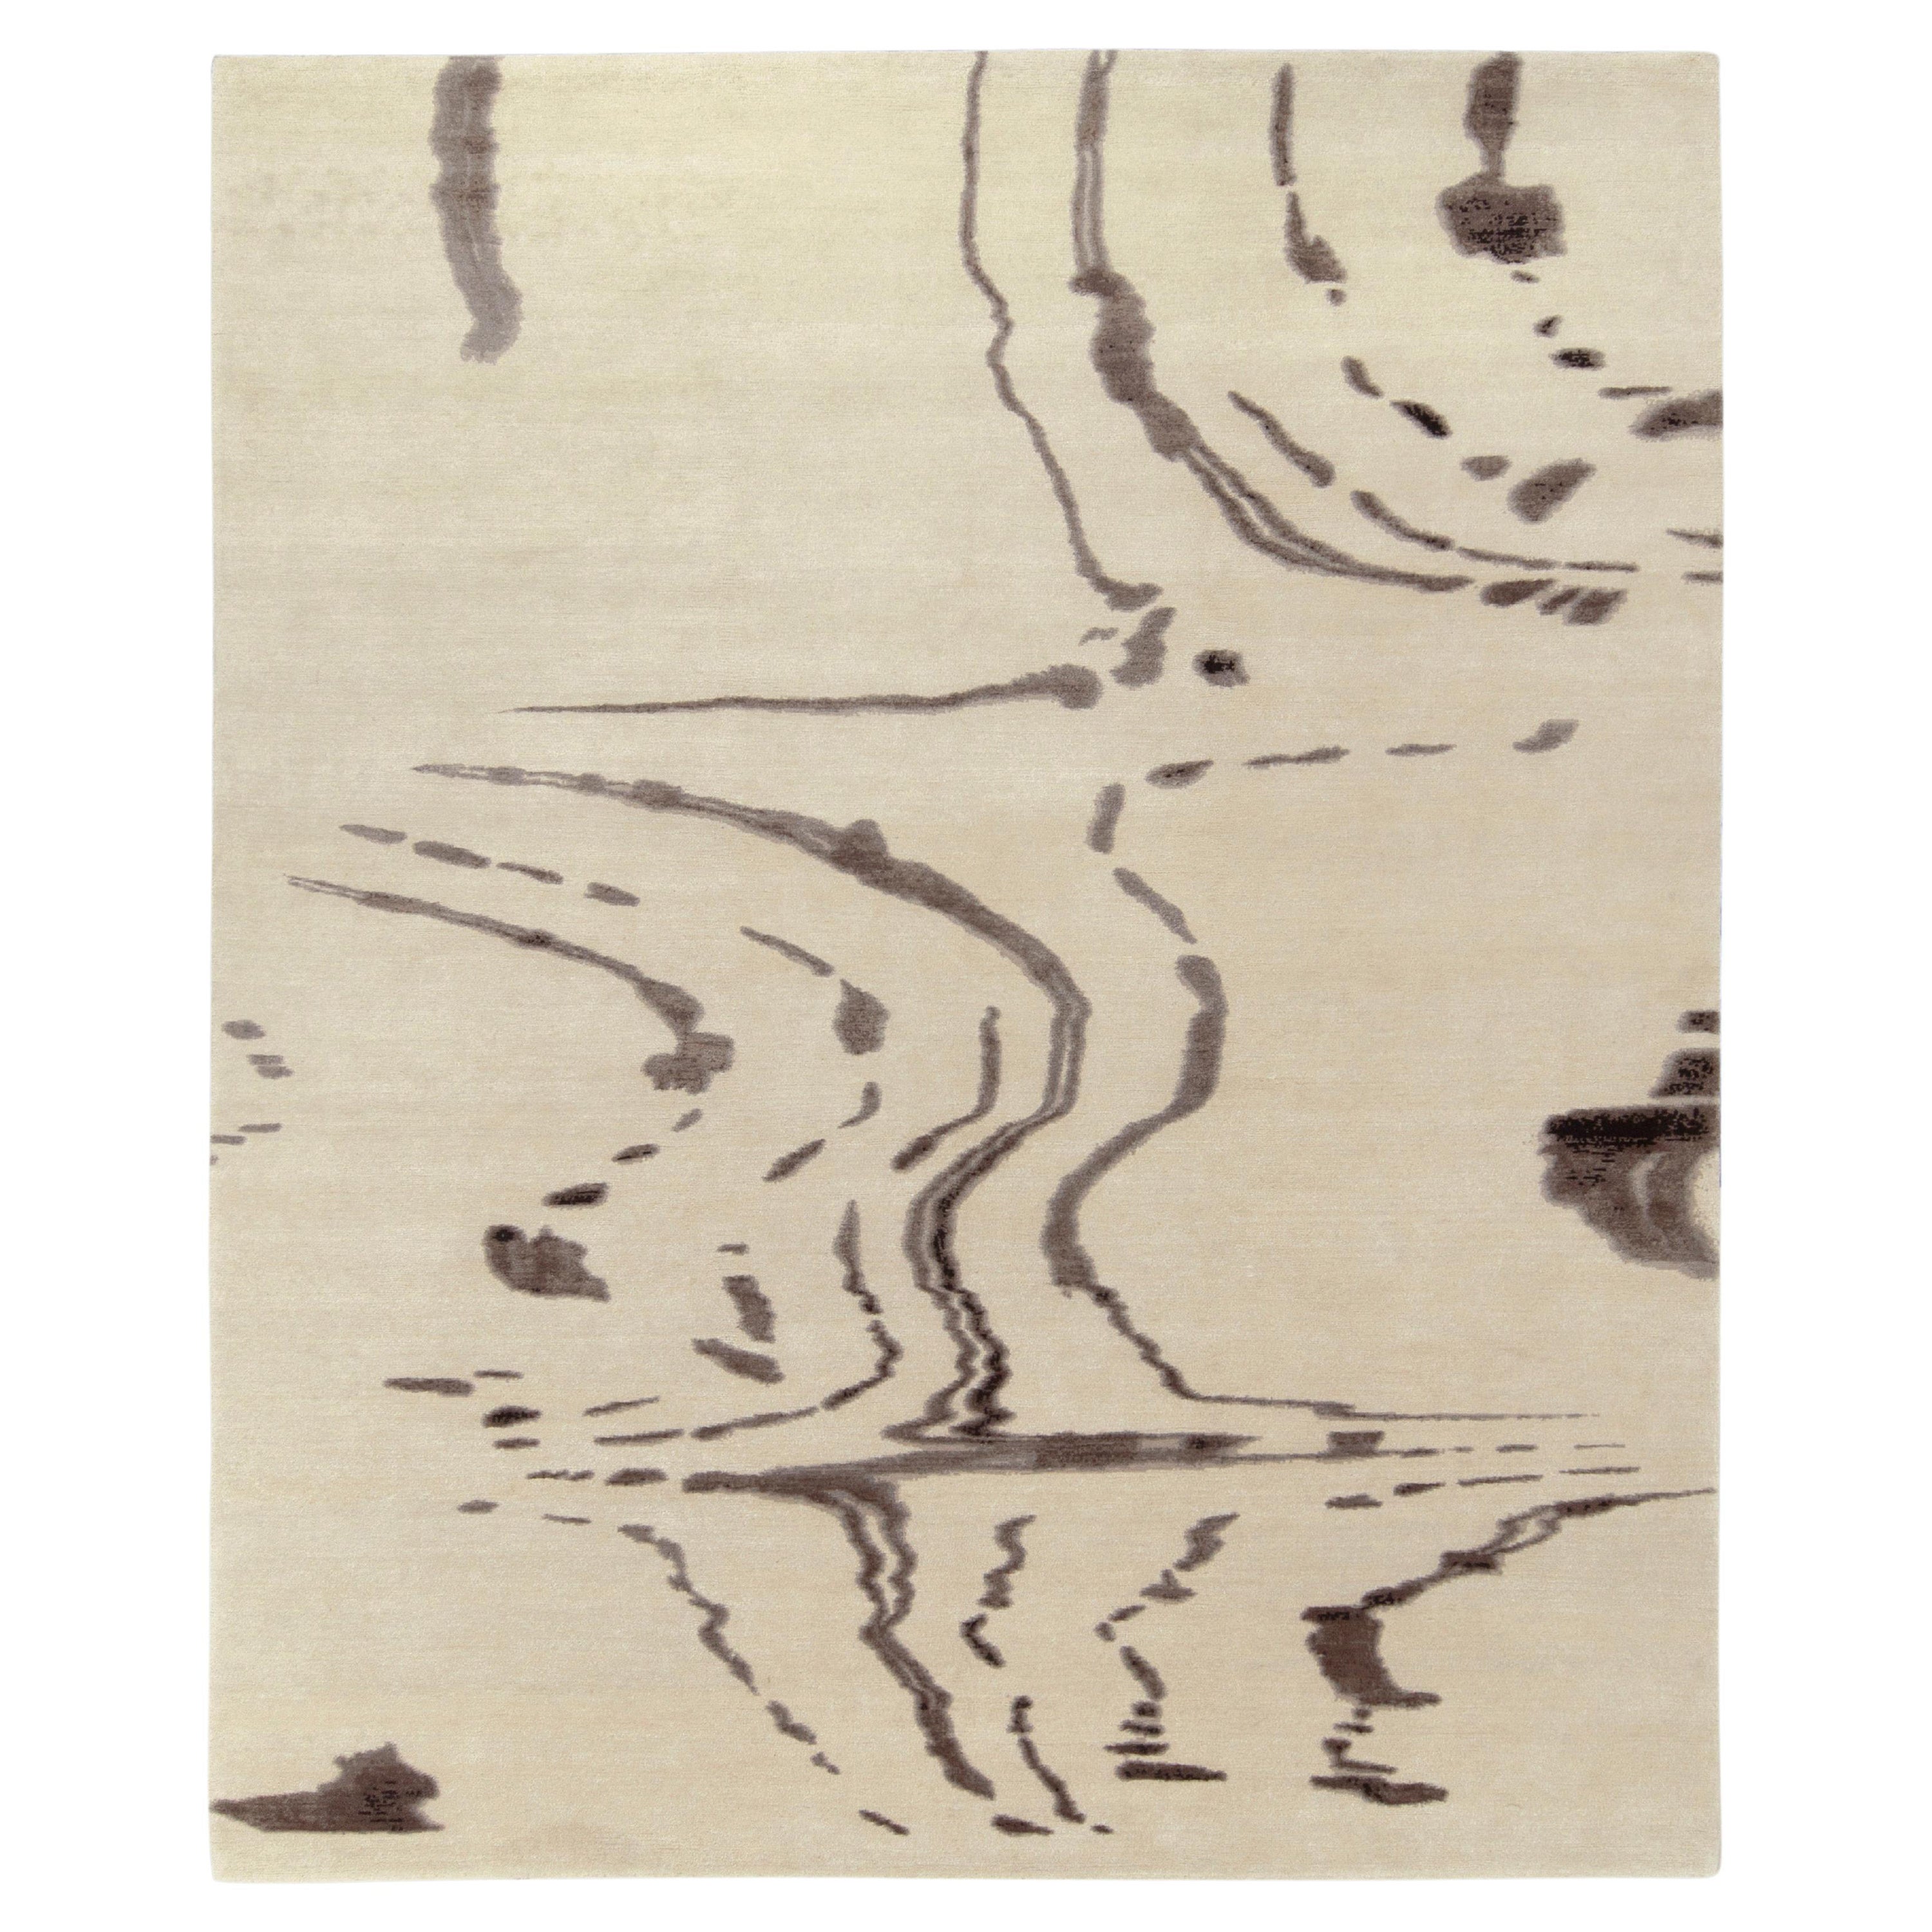 Rug & Kilim's Hand-Knotted Abstract Rug in Beige-Brown, White and Black Pattern (Tapis abstrait noué à la main à motifs beige, blanc et noir)